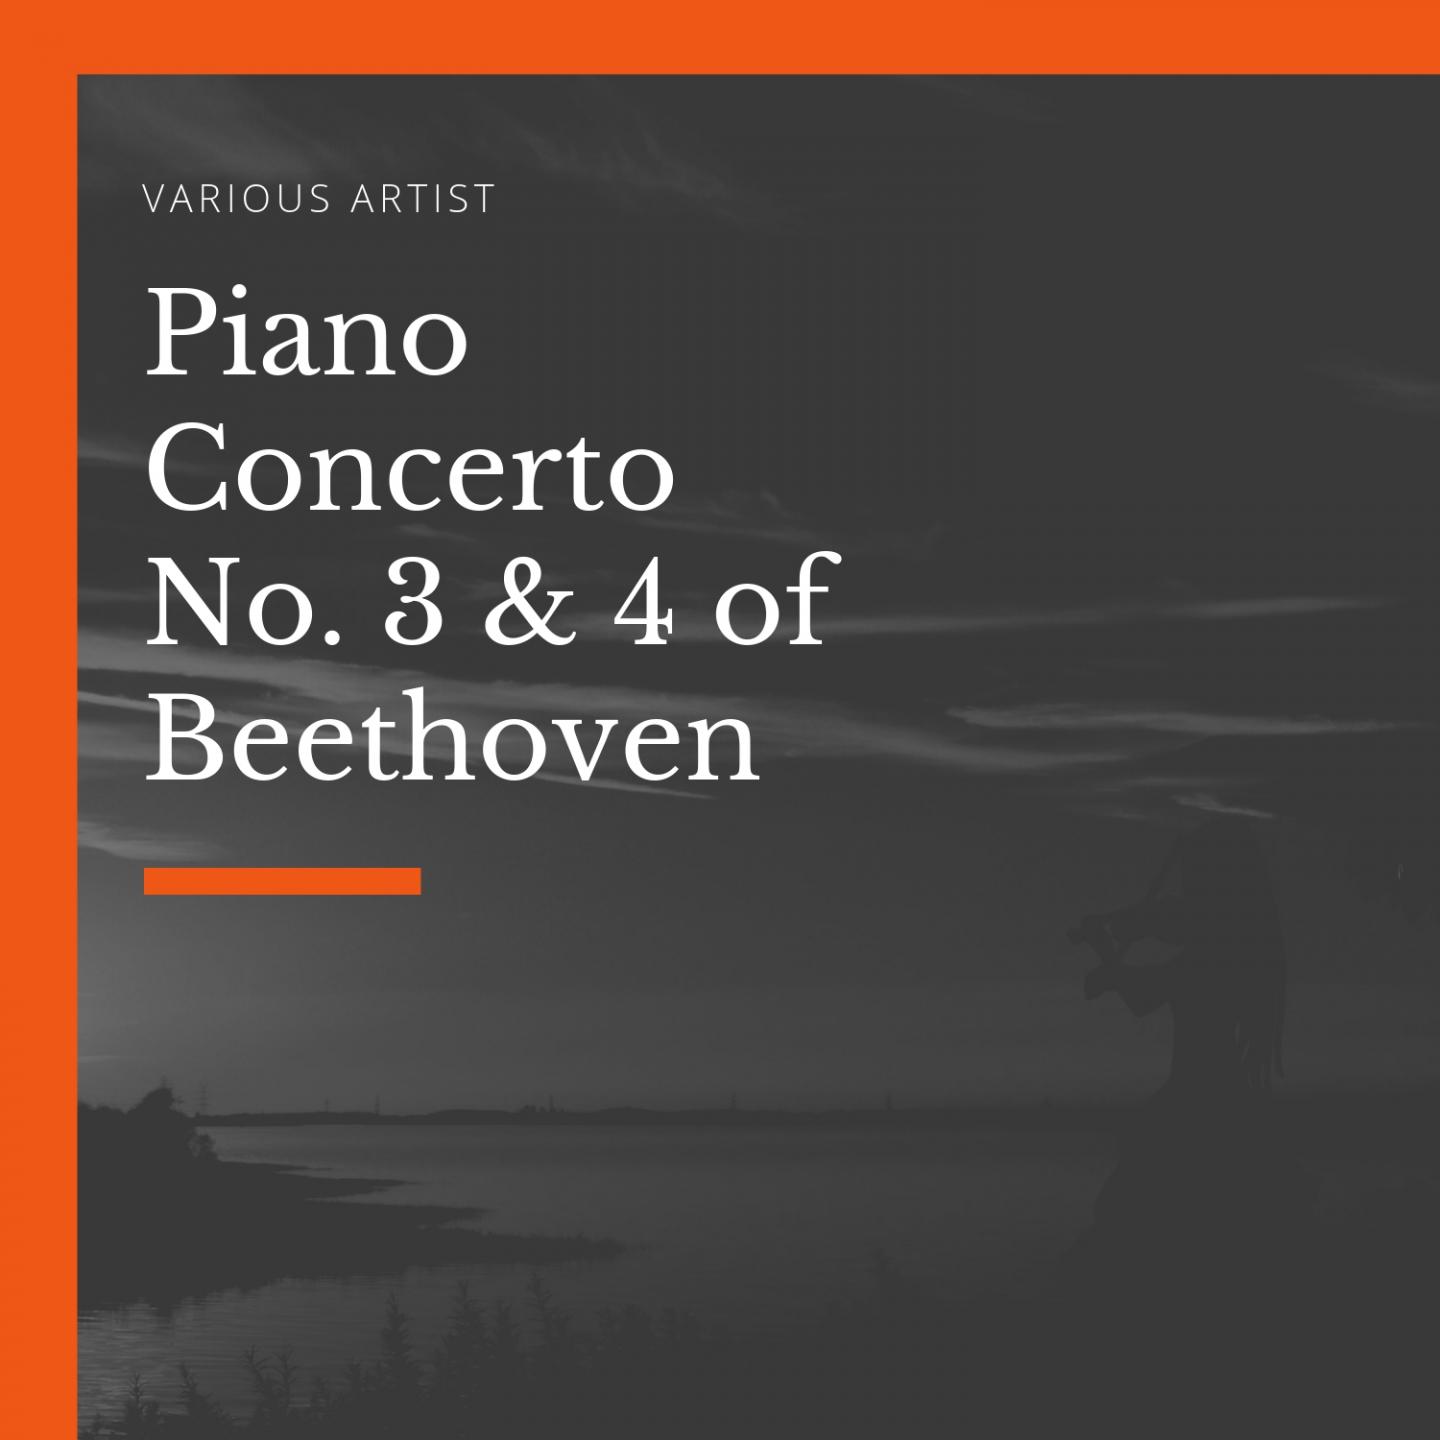 Piano Concerto No. 4, in G Major, Op. 58: I. Allegro moderato